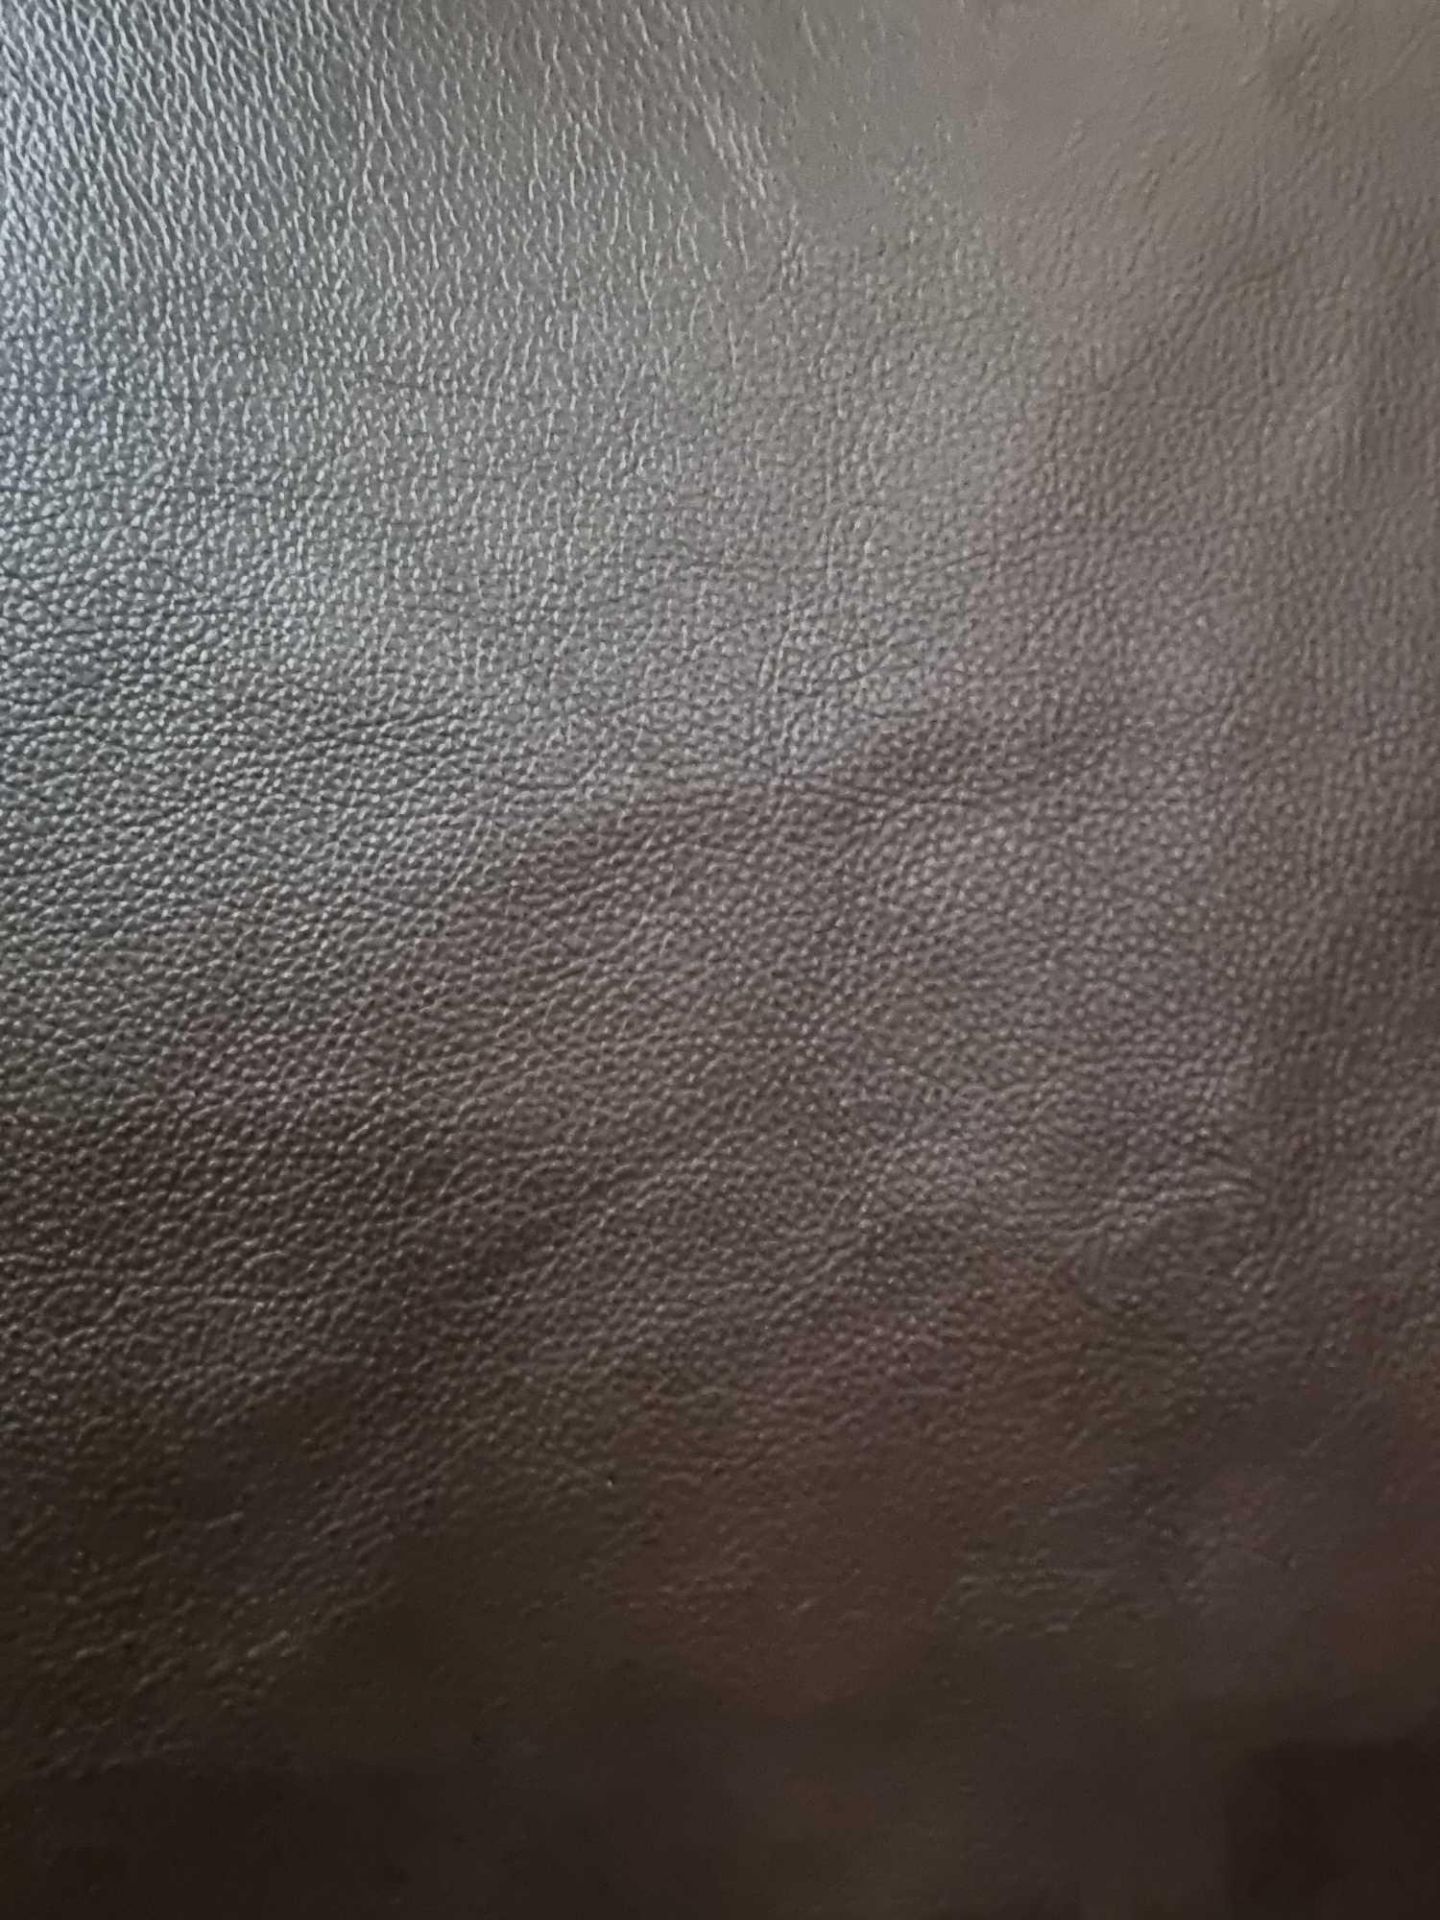 Mastrotto Hudson Chocolate Leather Hide approximately 3 4M2 2 x 1 7cm ( Hide No,242) - Bild 2 aus 2